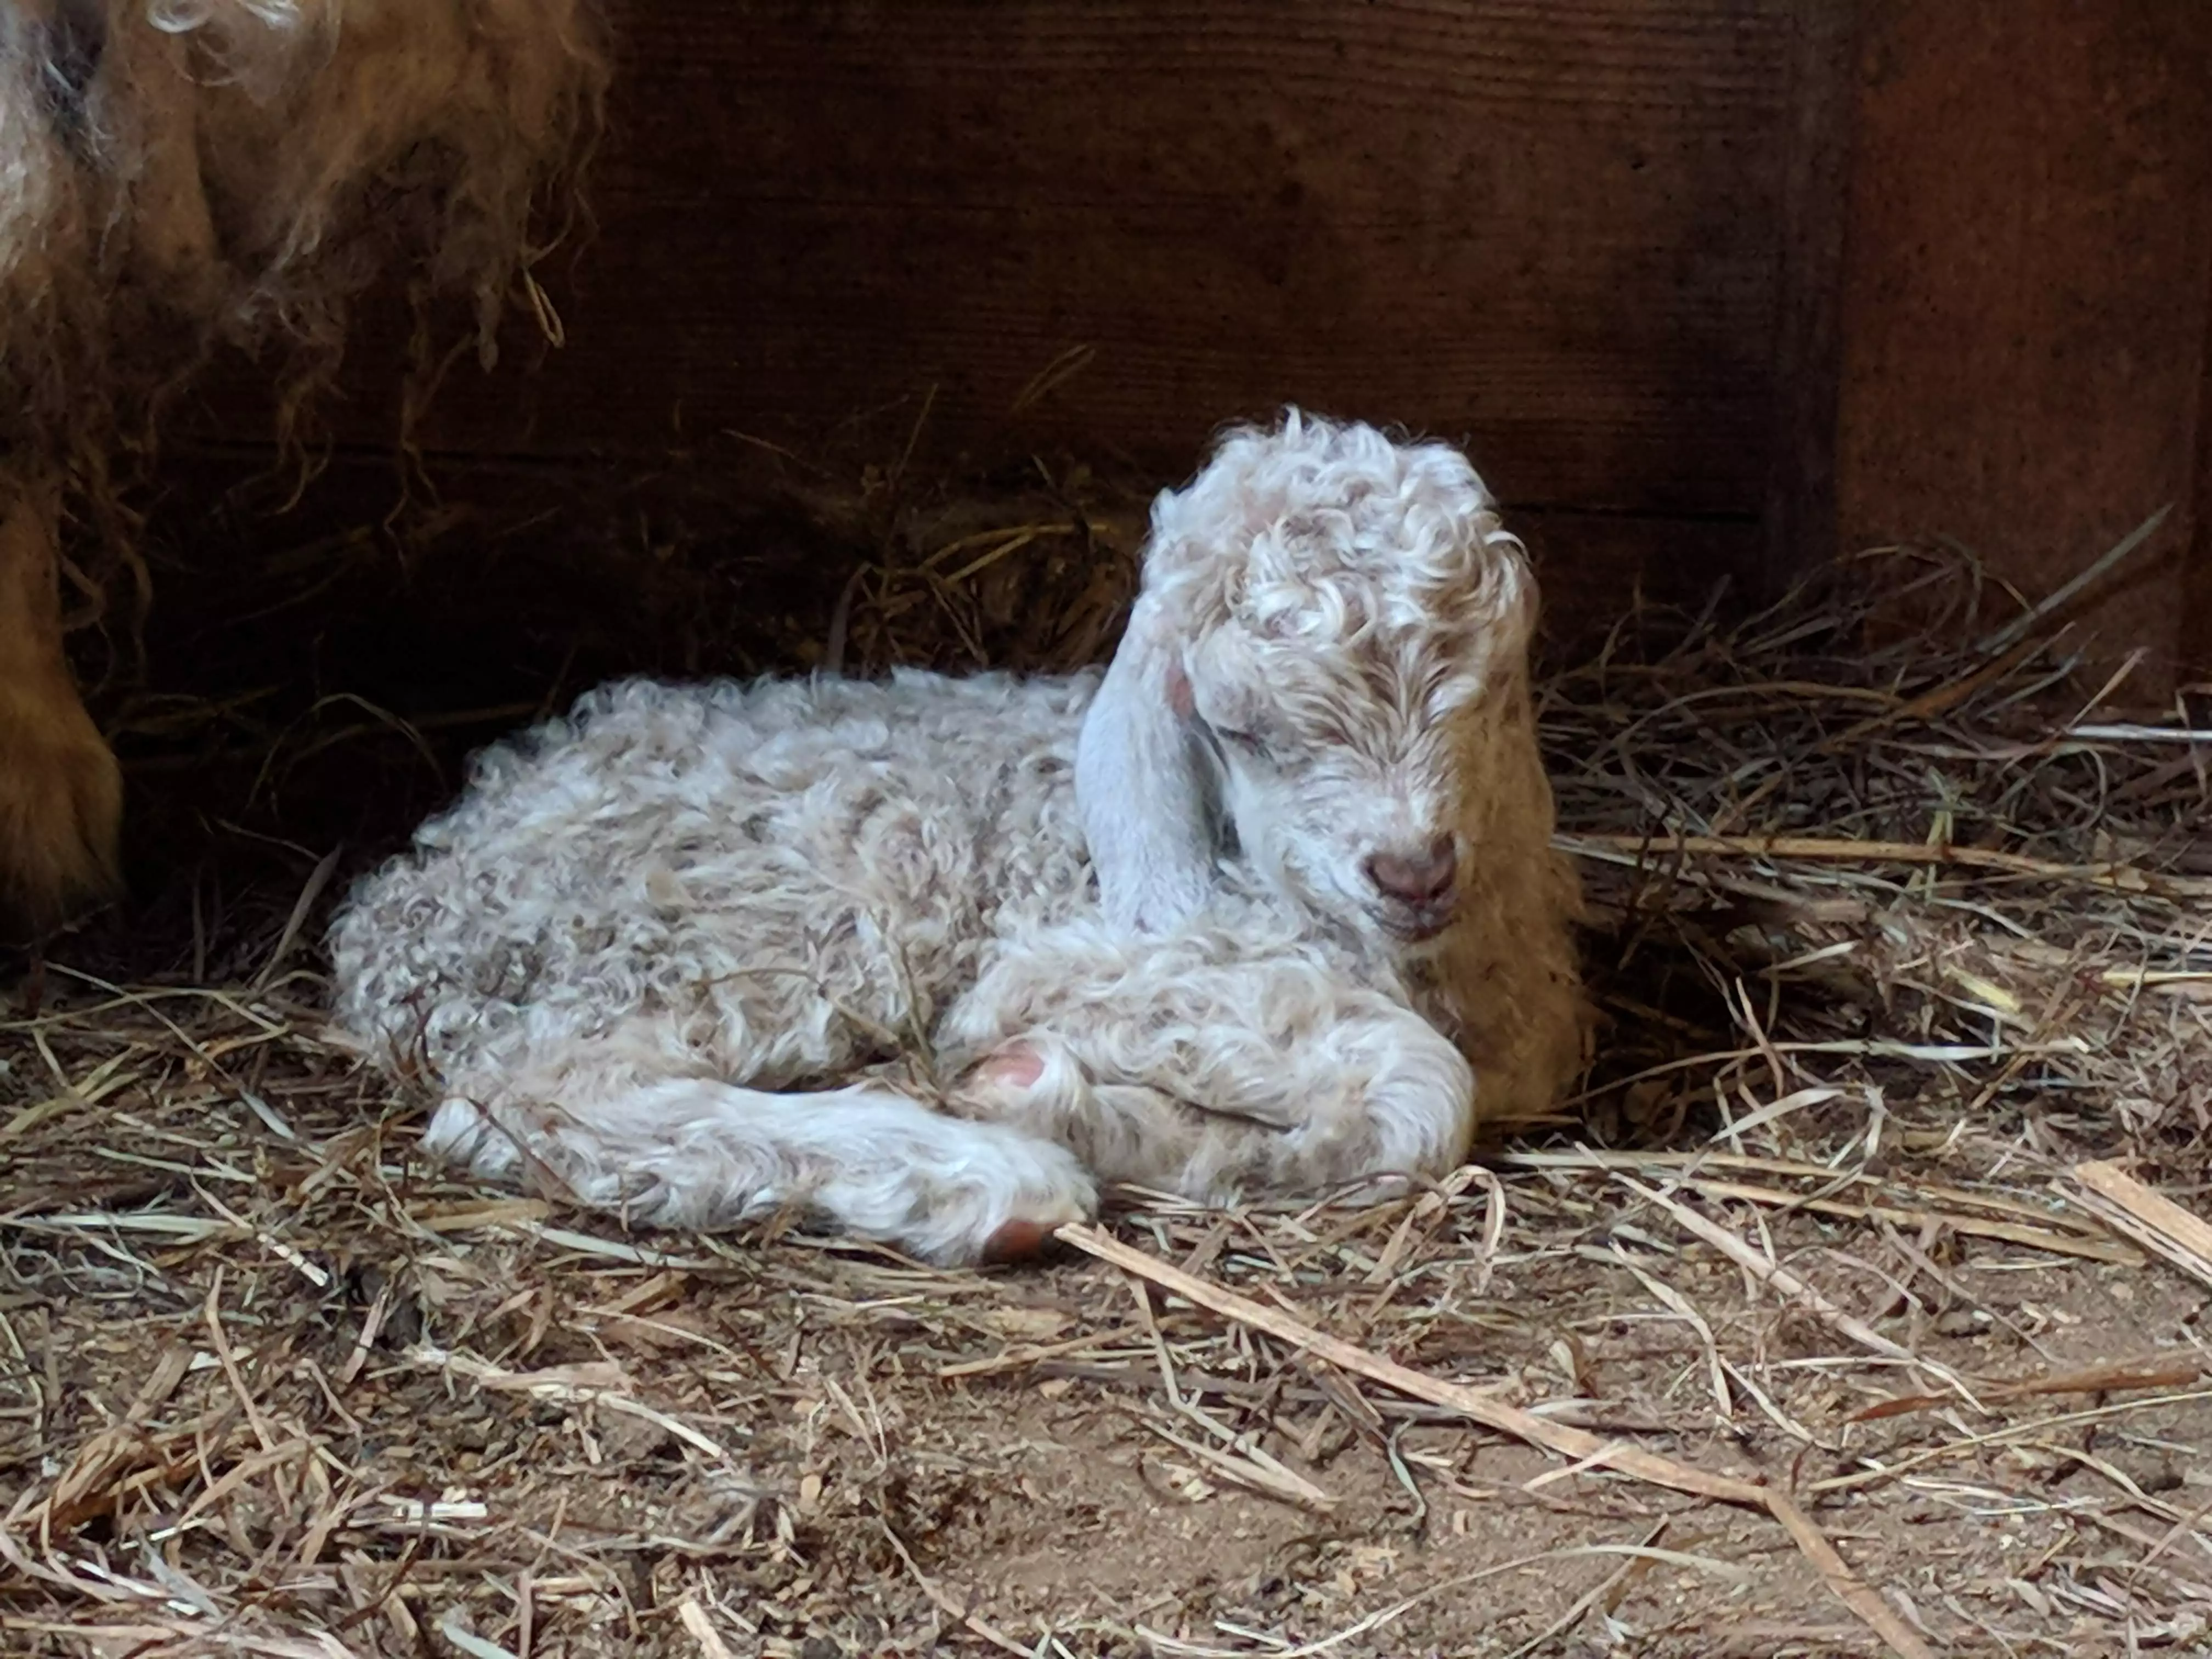 An image of a newborn goat named Mercury